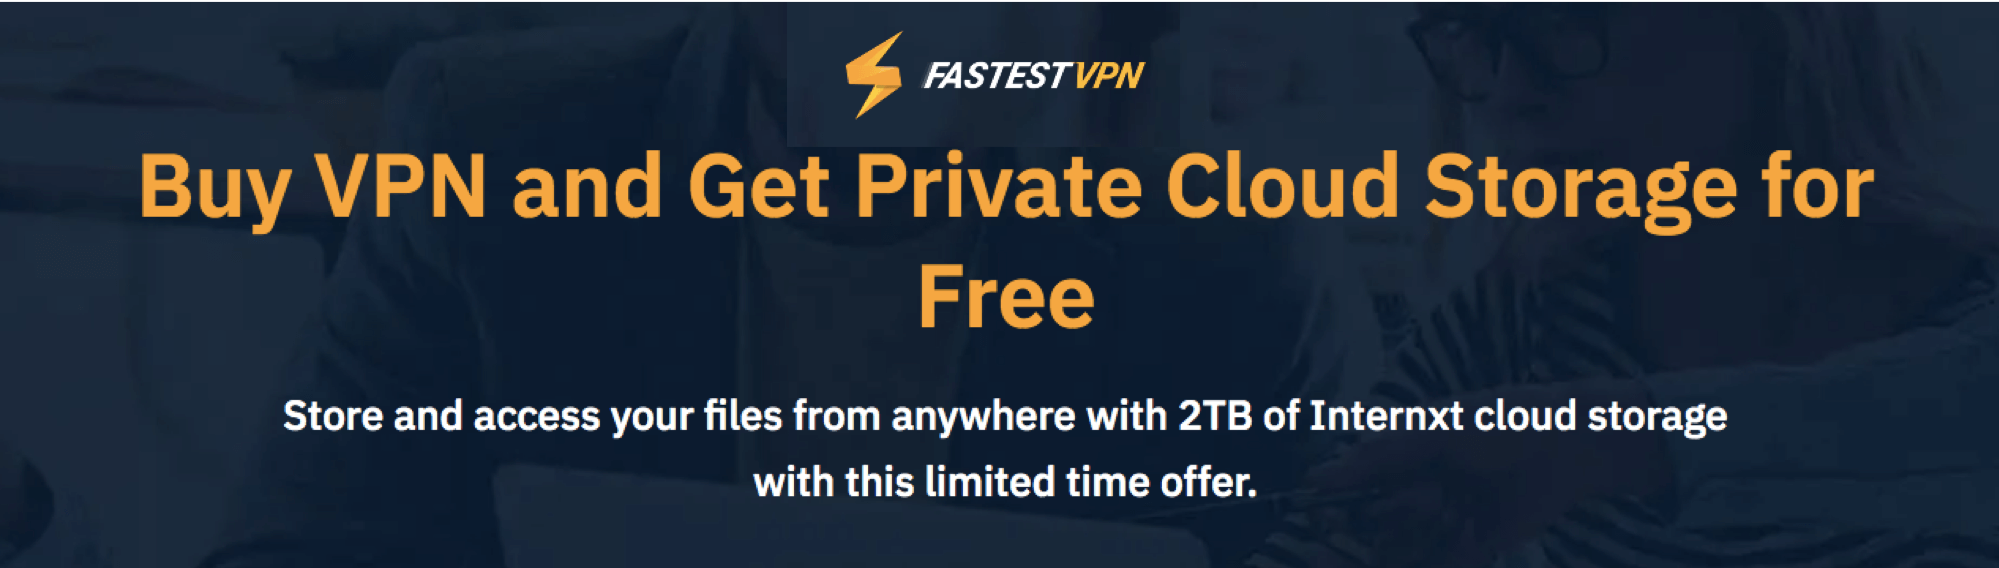 Fastest_VPN